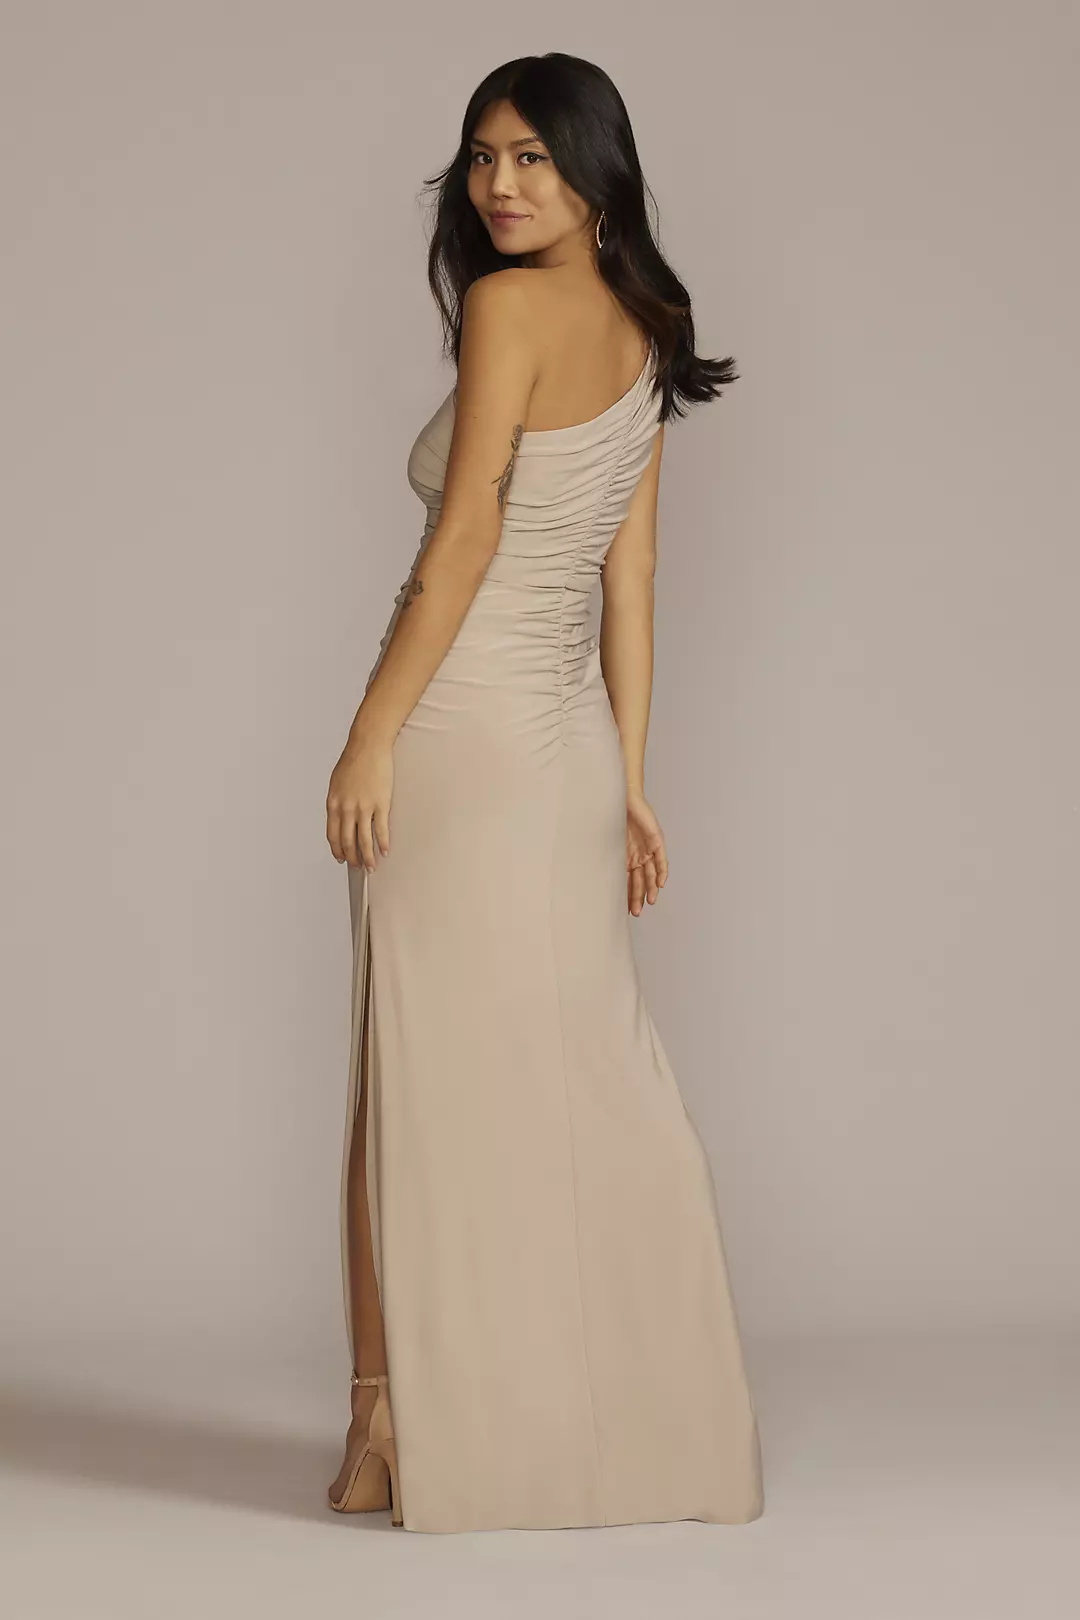 Sheath One-shoulder Simple Black Short Bridesmaid Dresses, BD0620 – Okstyles